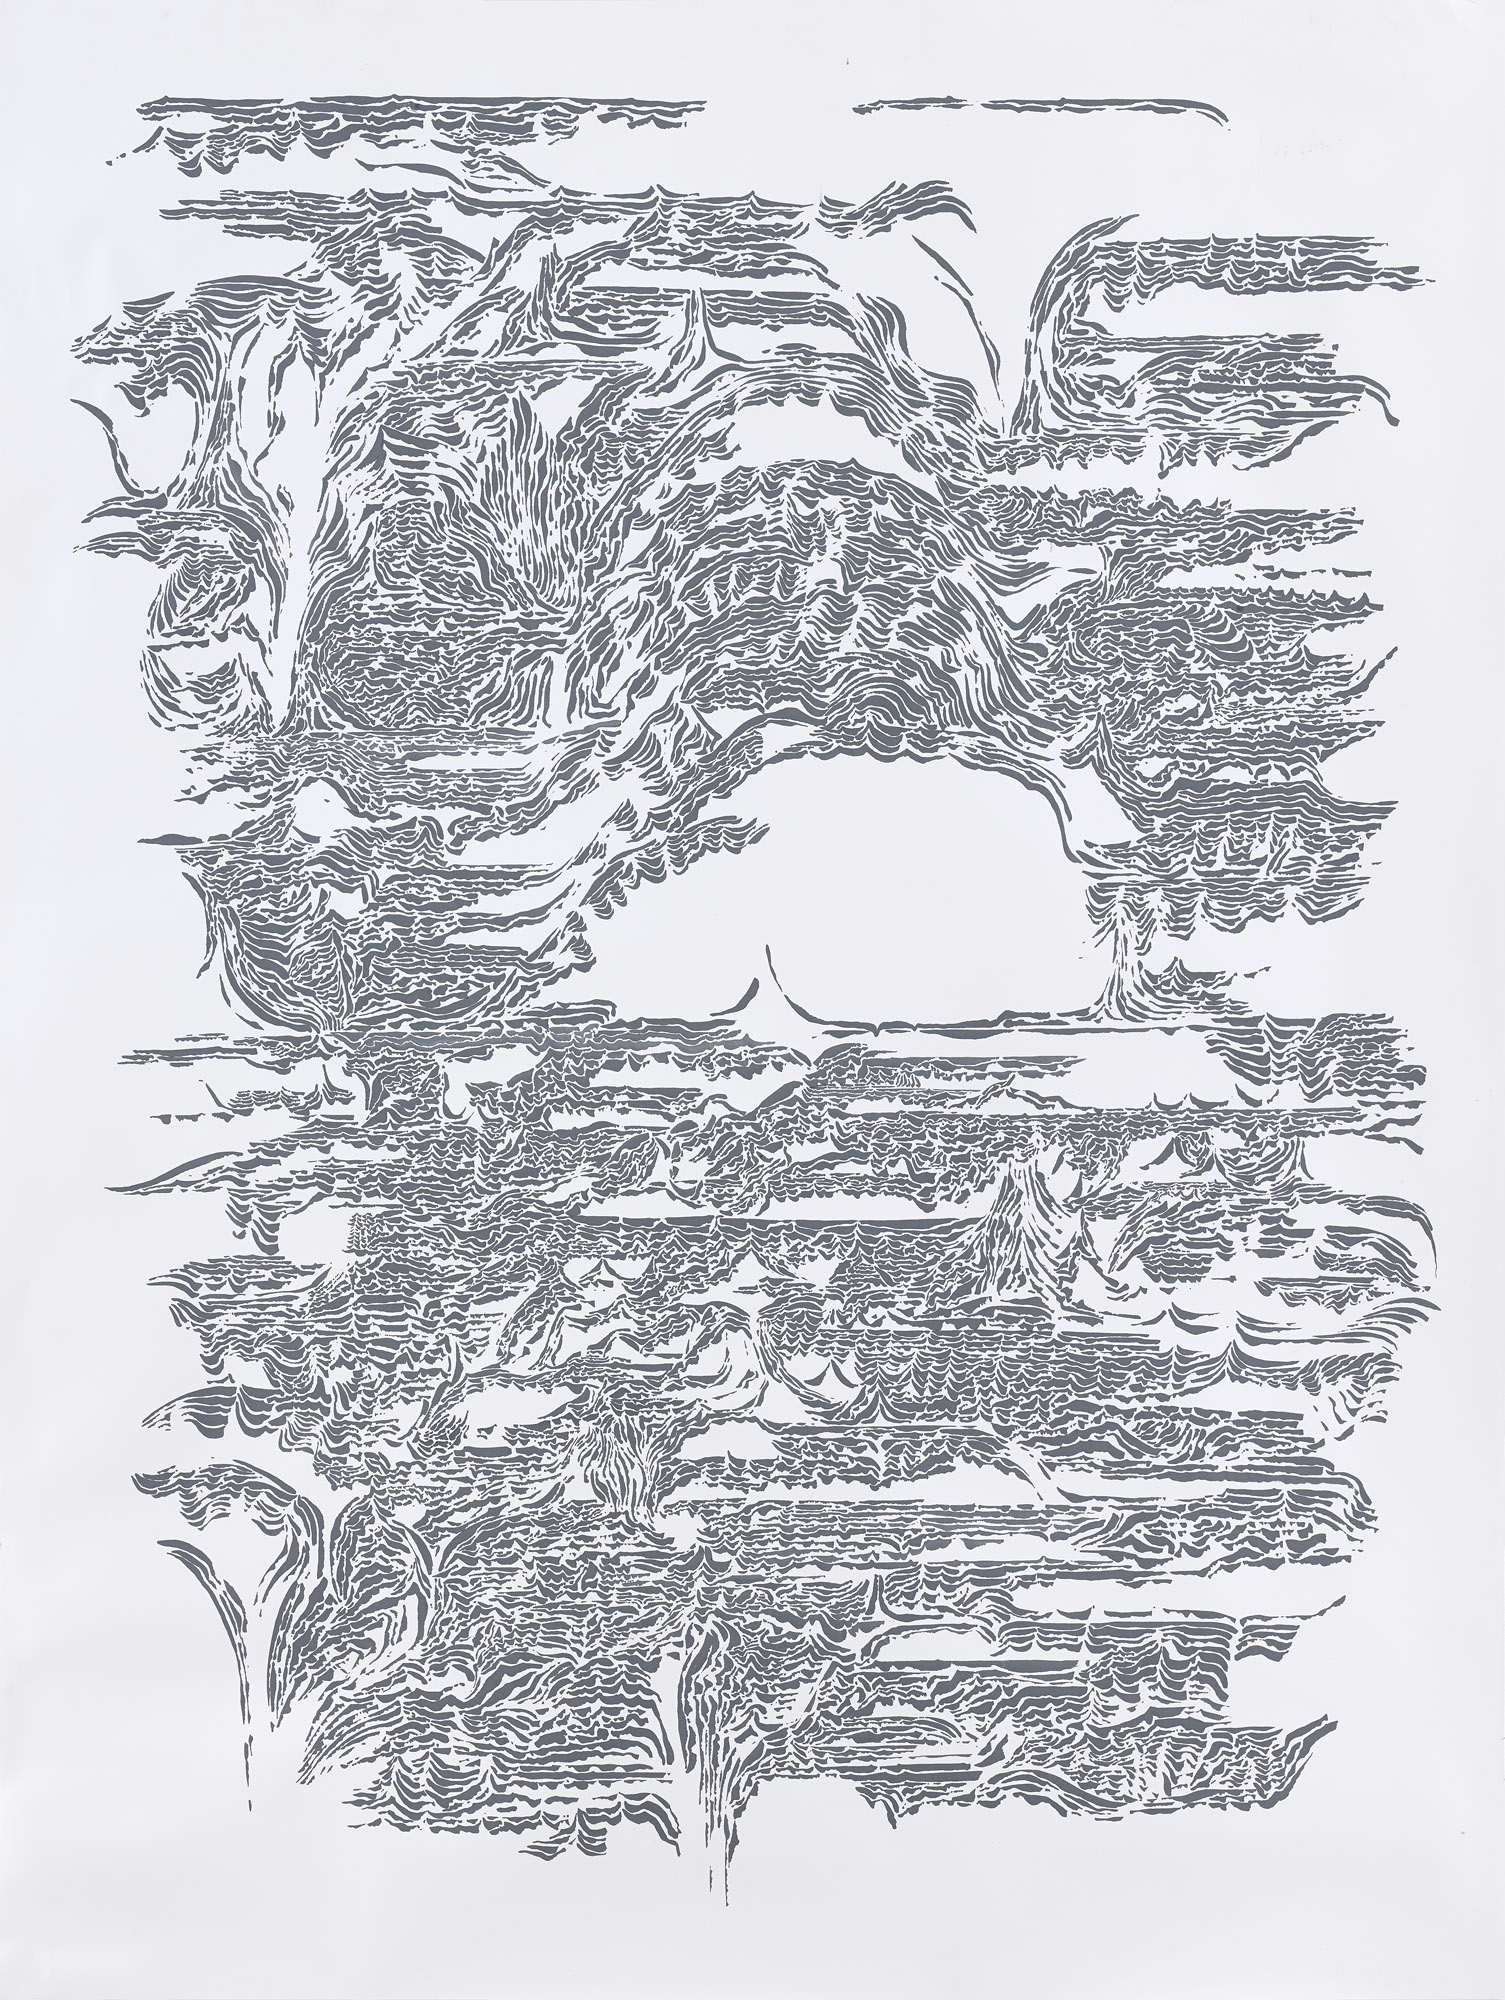 BK P7439 / untitled / ink on paper / 200x150cm / 2015